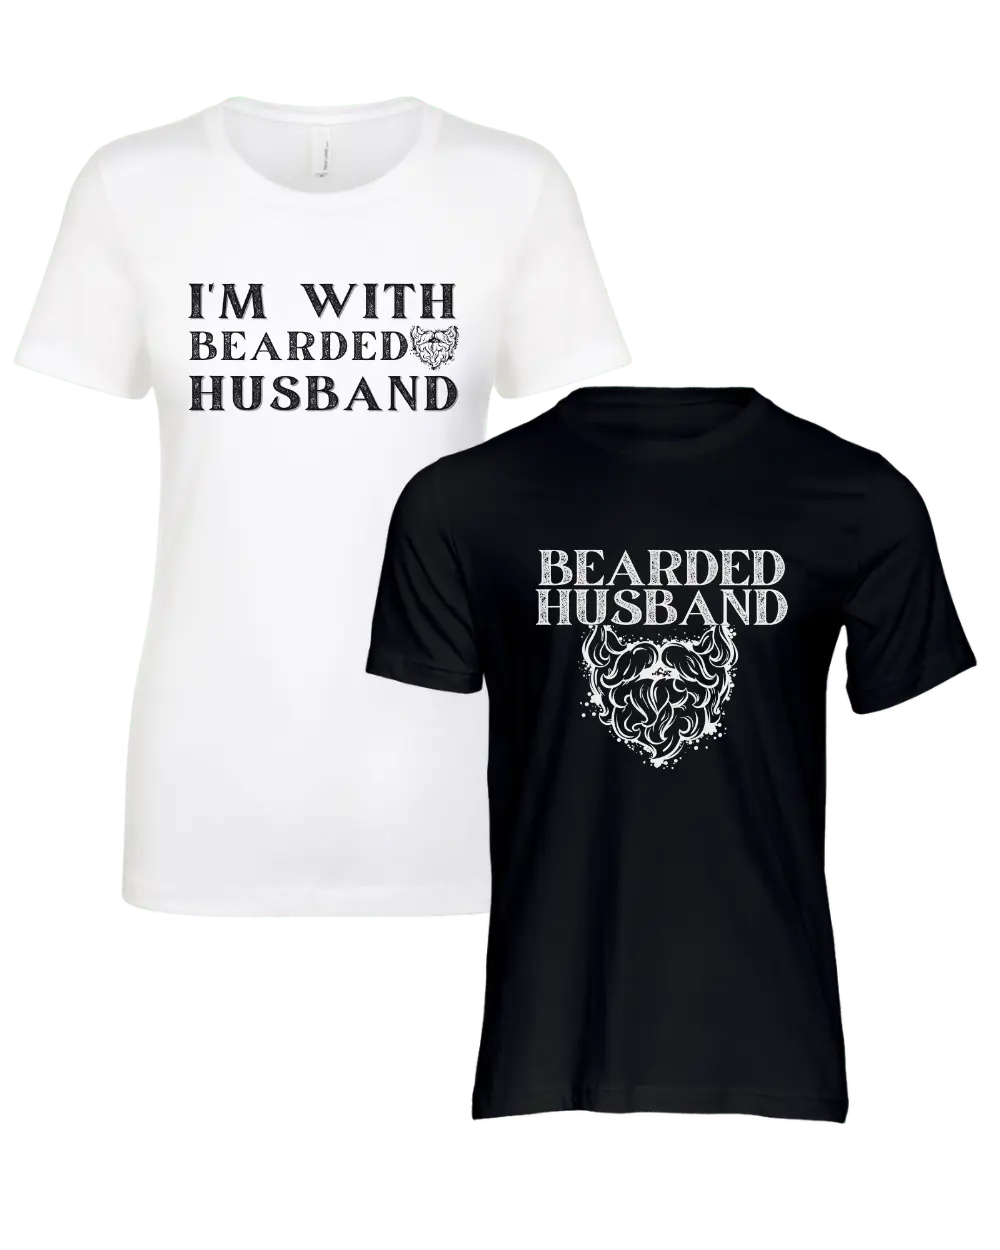 I'm With Bearded Husband/Bearded Husband Couple T-Shirt|Couple T-shirt